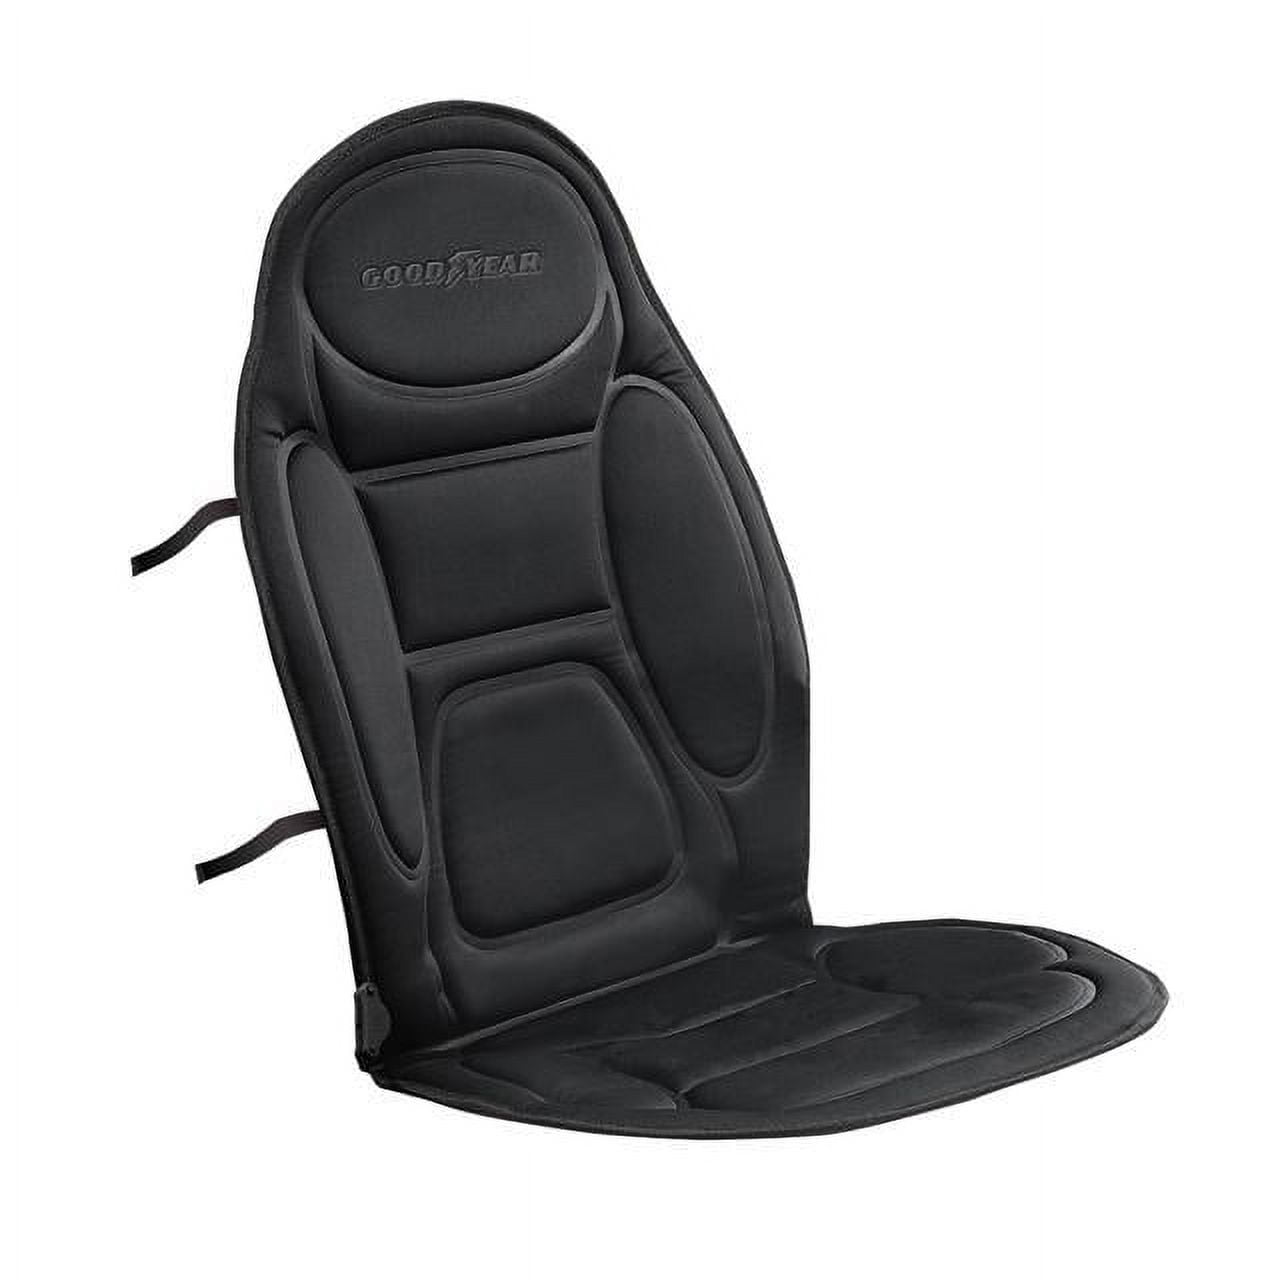 Seat cushion Automotive at